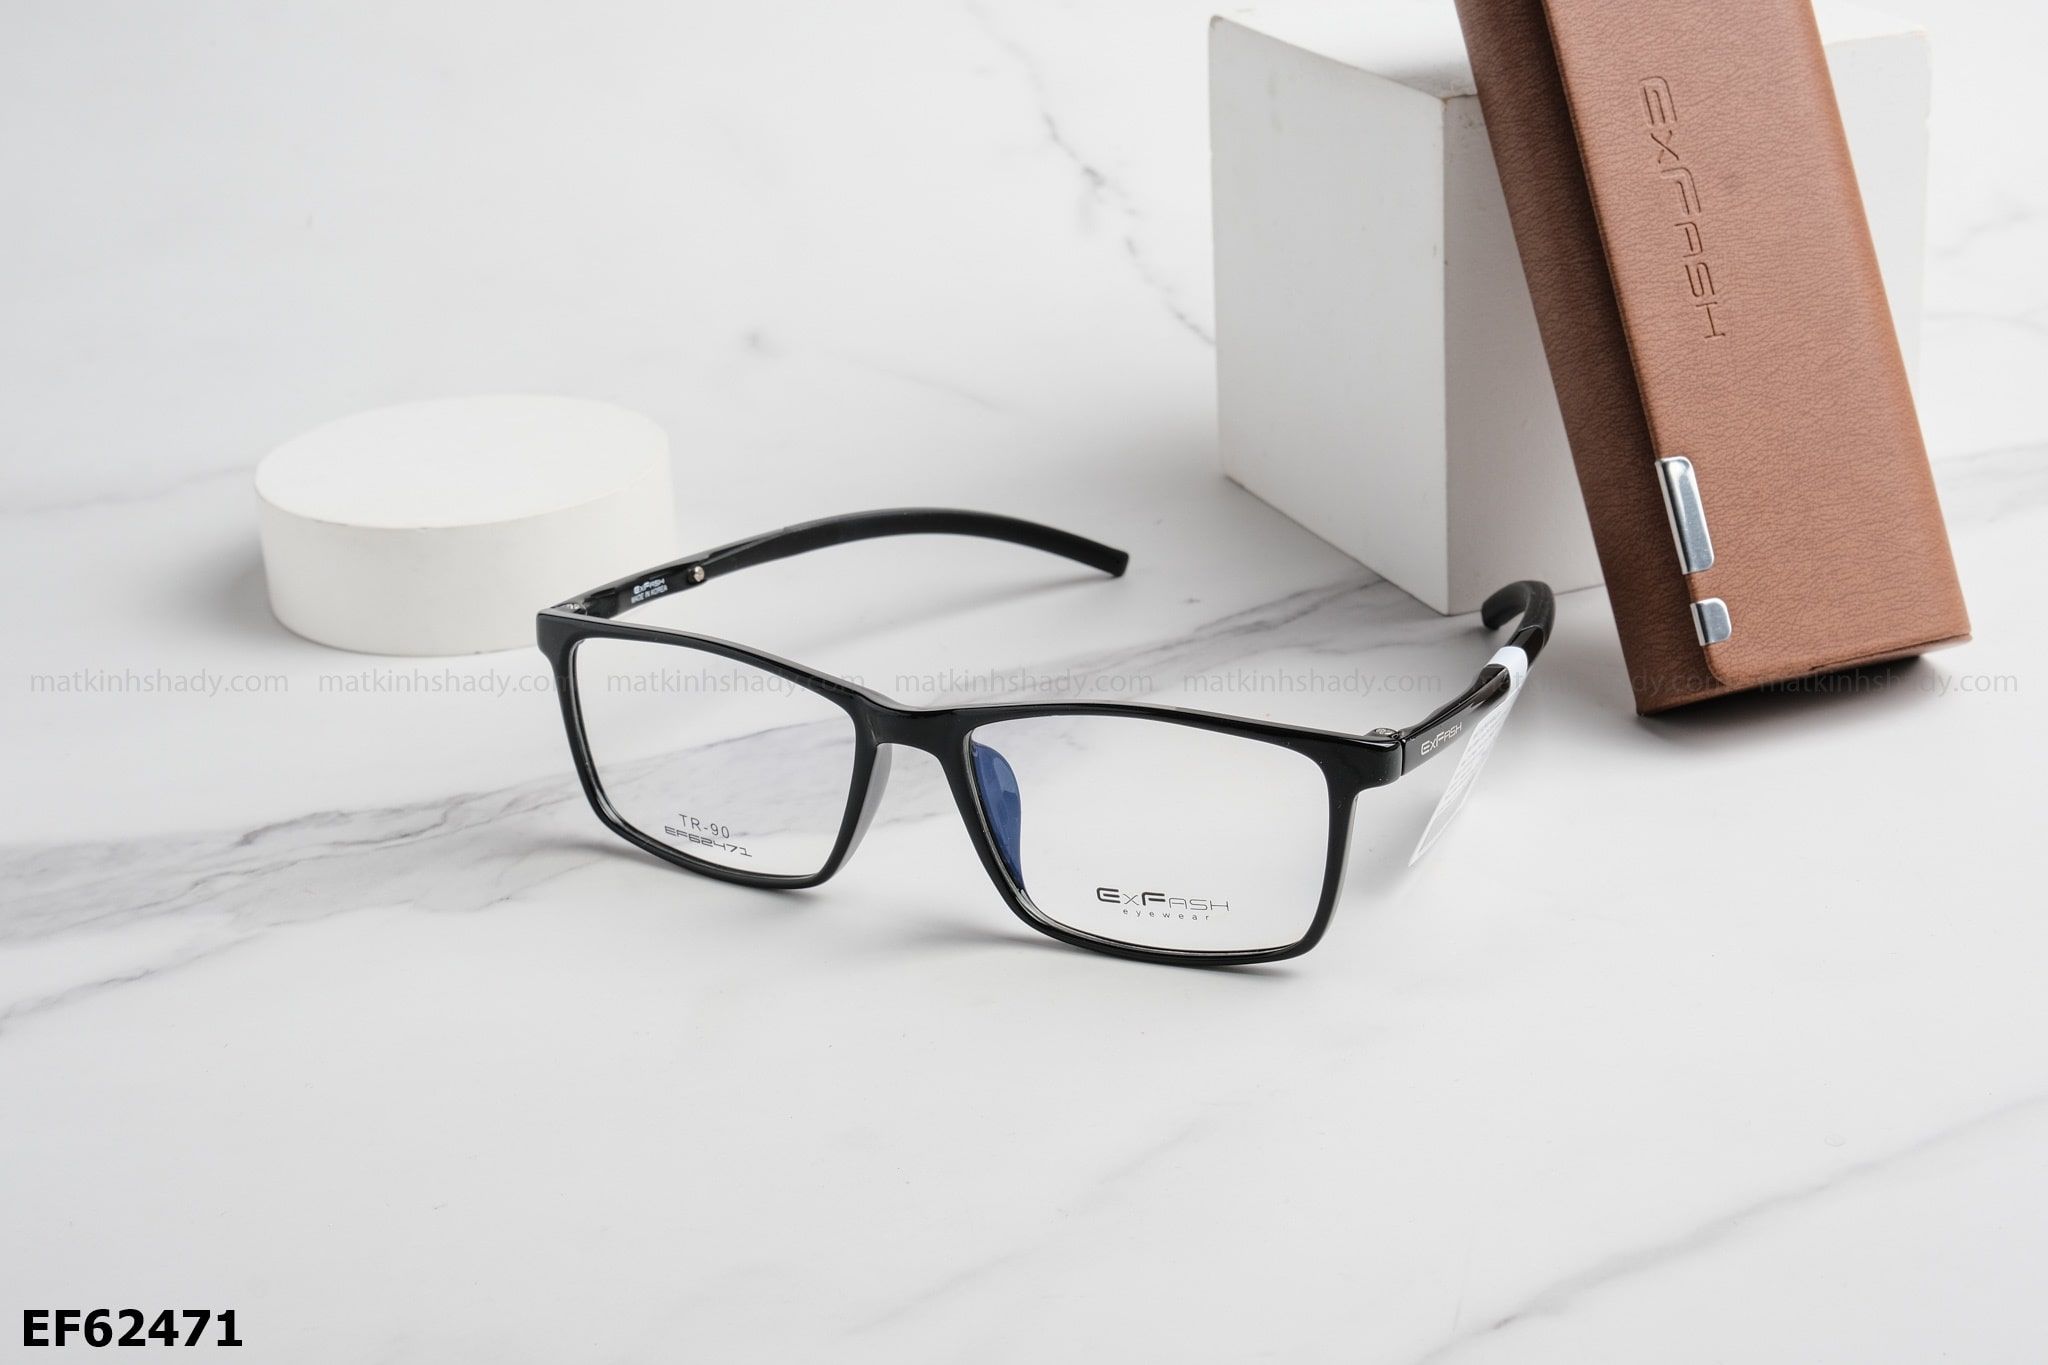  Exfash Eyewear - Glasses - EF62471 